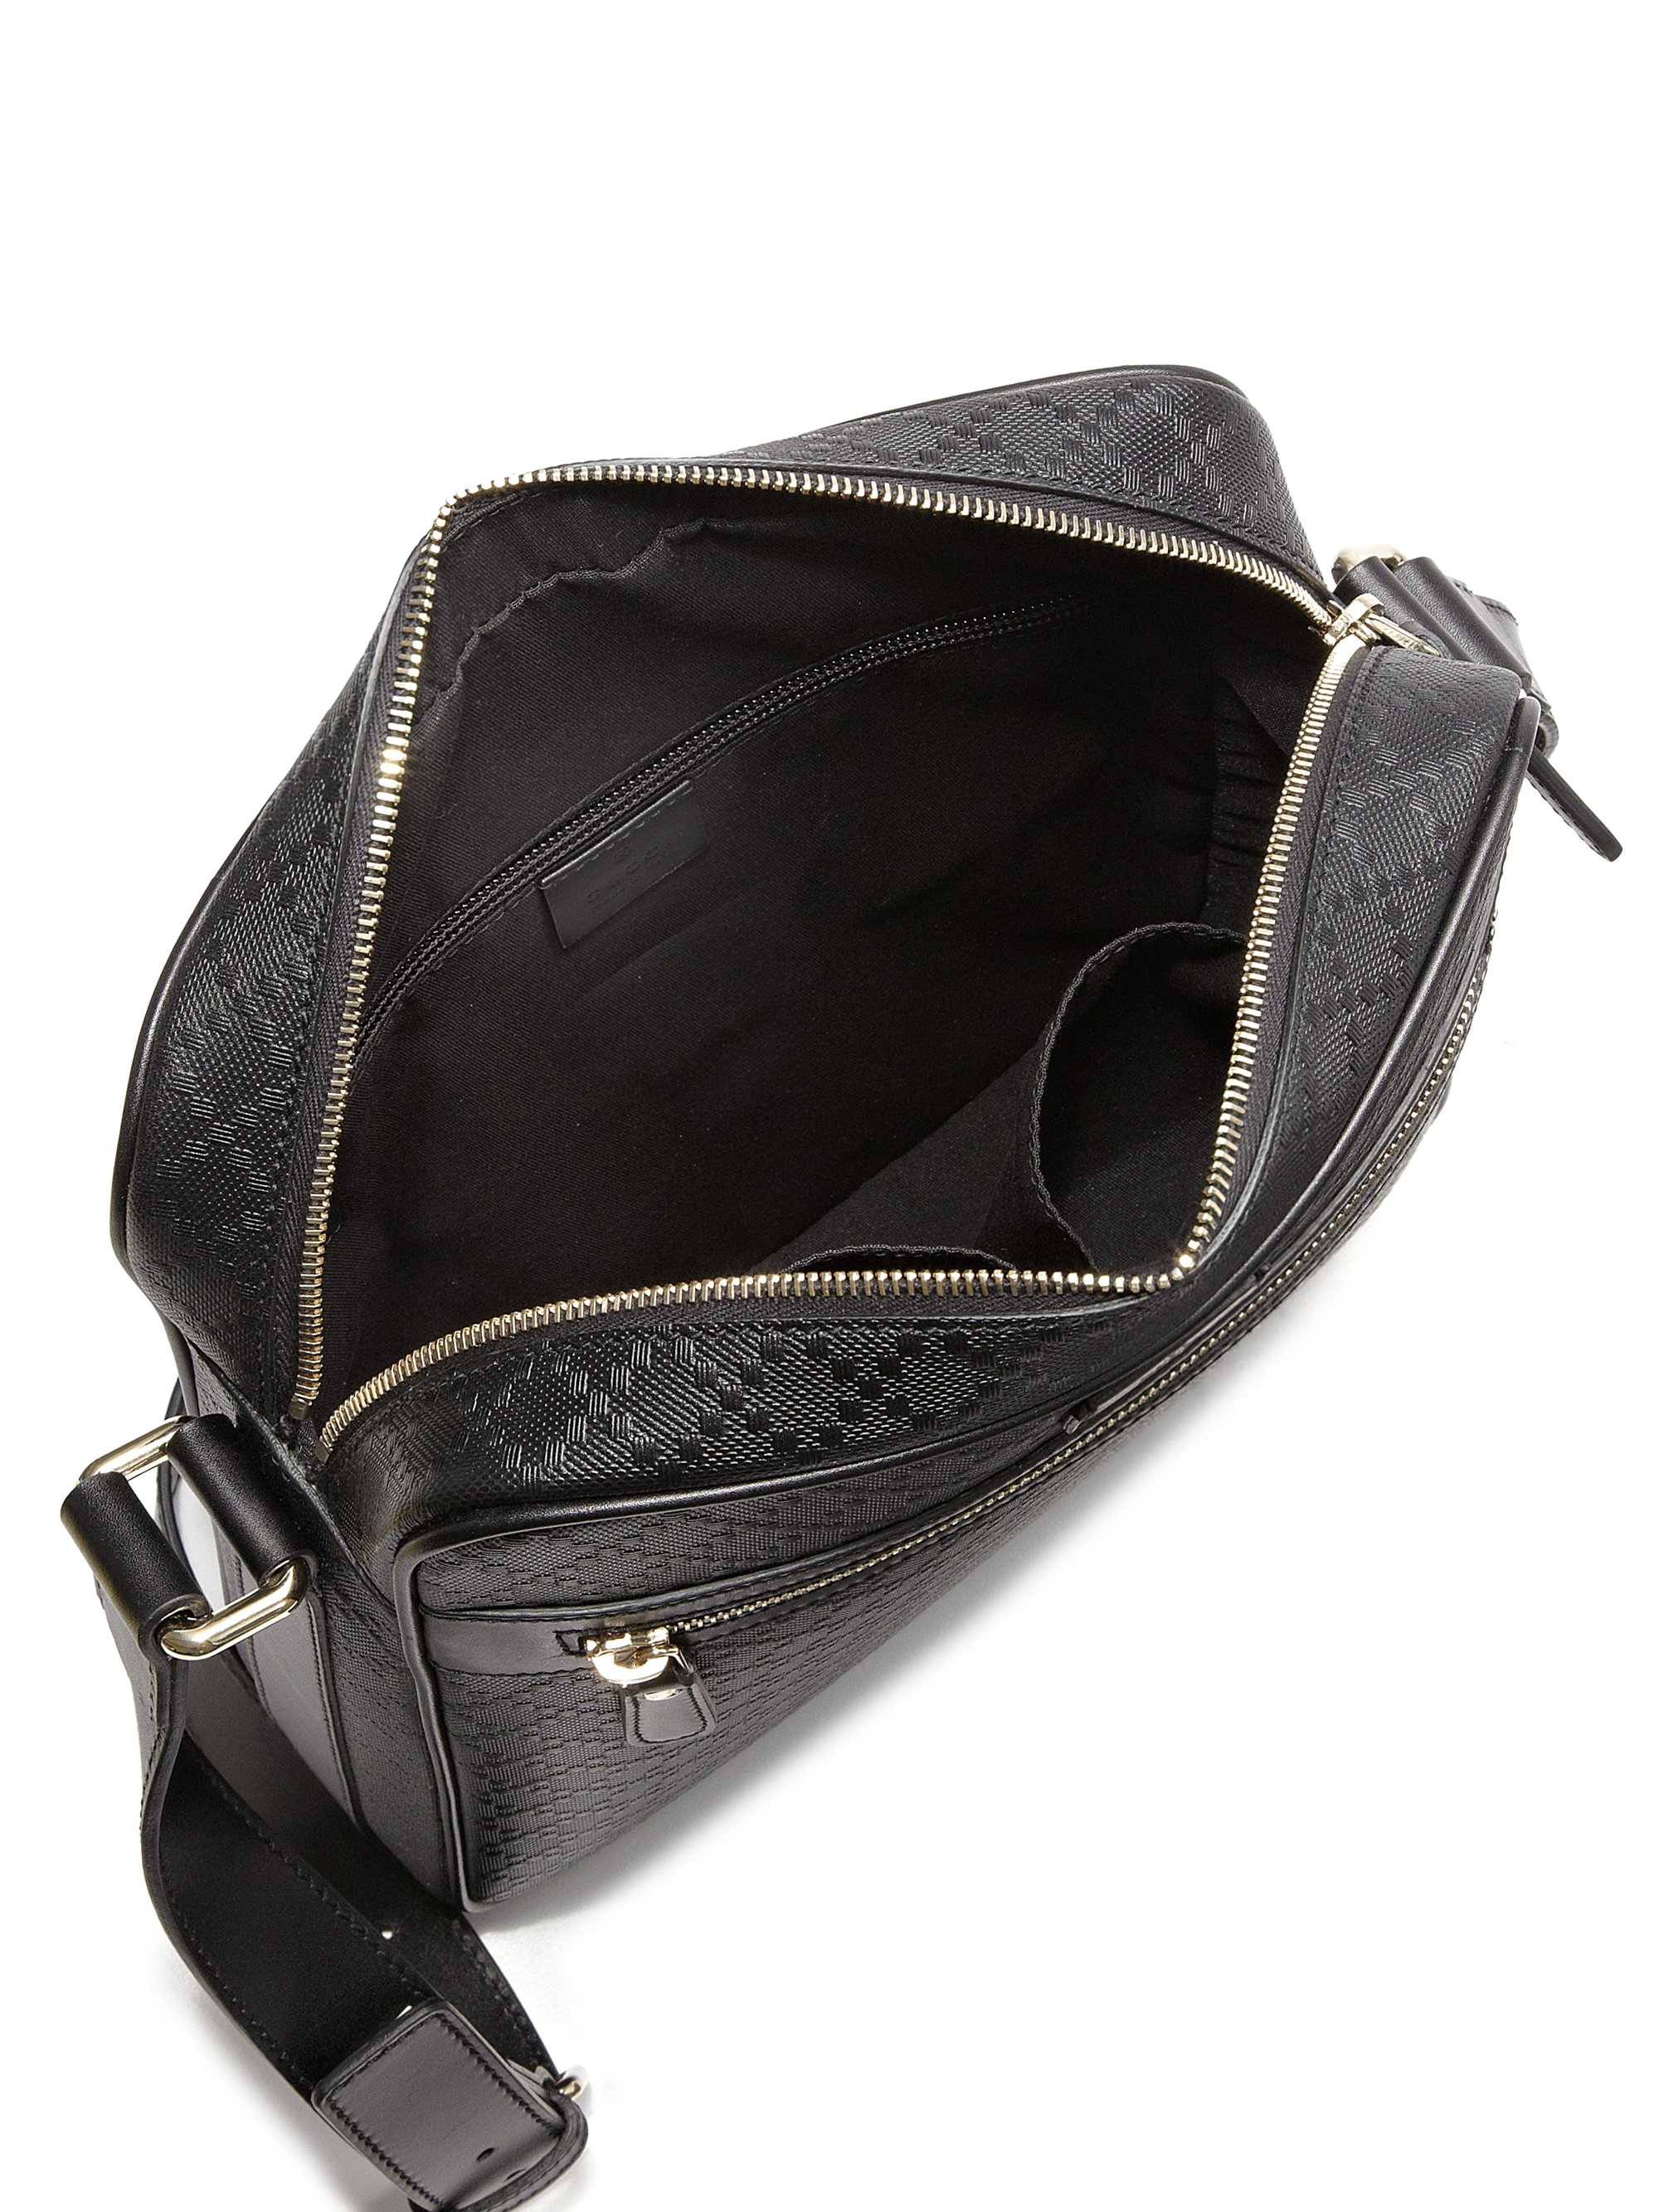 Gucci Bright Diamante Leather Shoulder Bag in Black for Men - Lyst